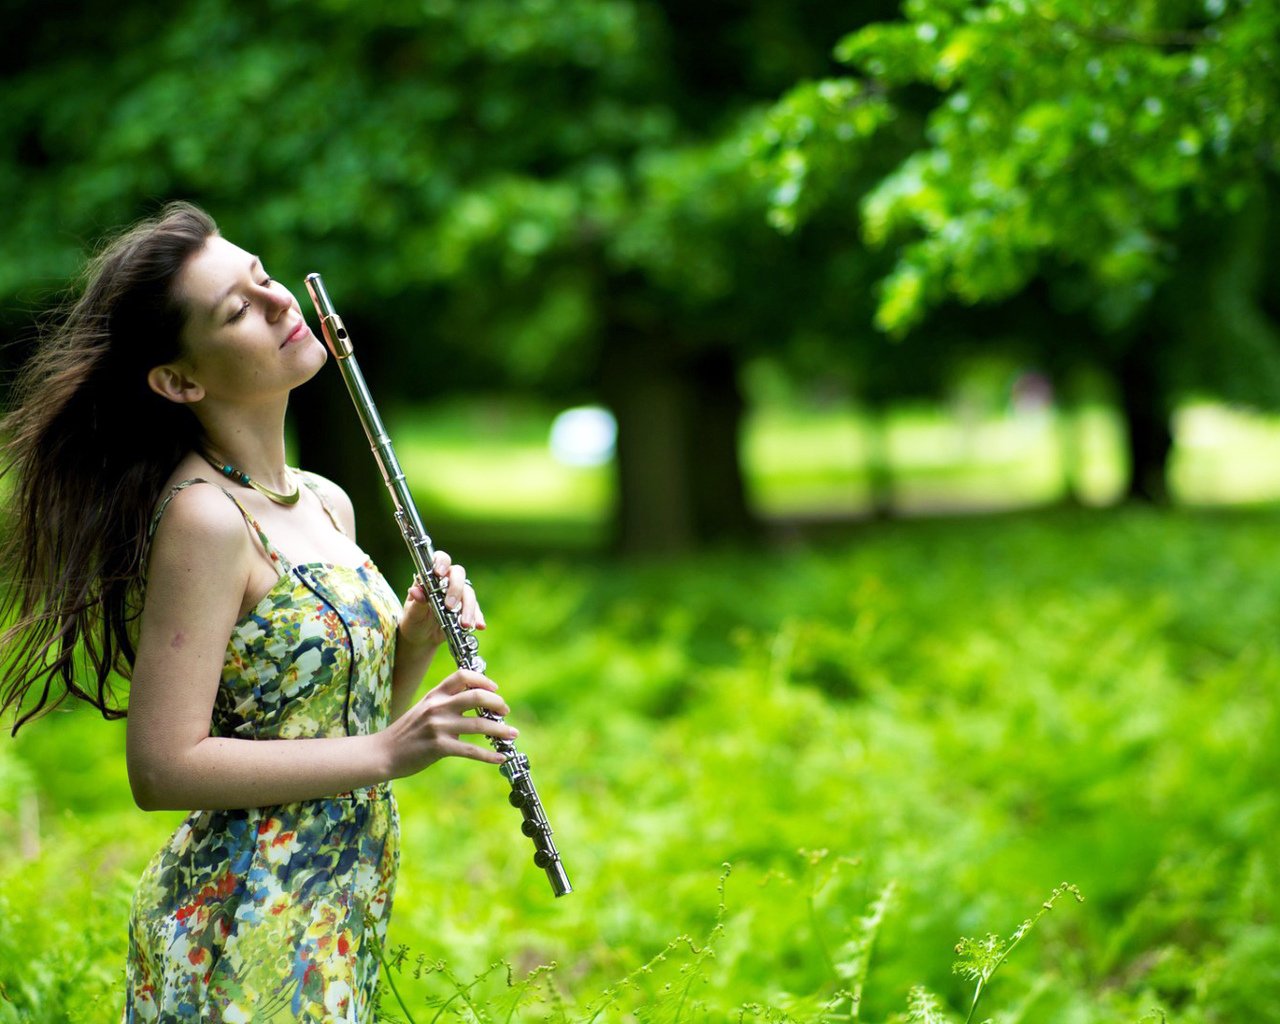 Flute sound. Флейта. Фотосессия с флейтой. Девочка с флейтой. Девушка флейтистка.